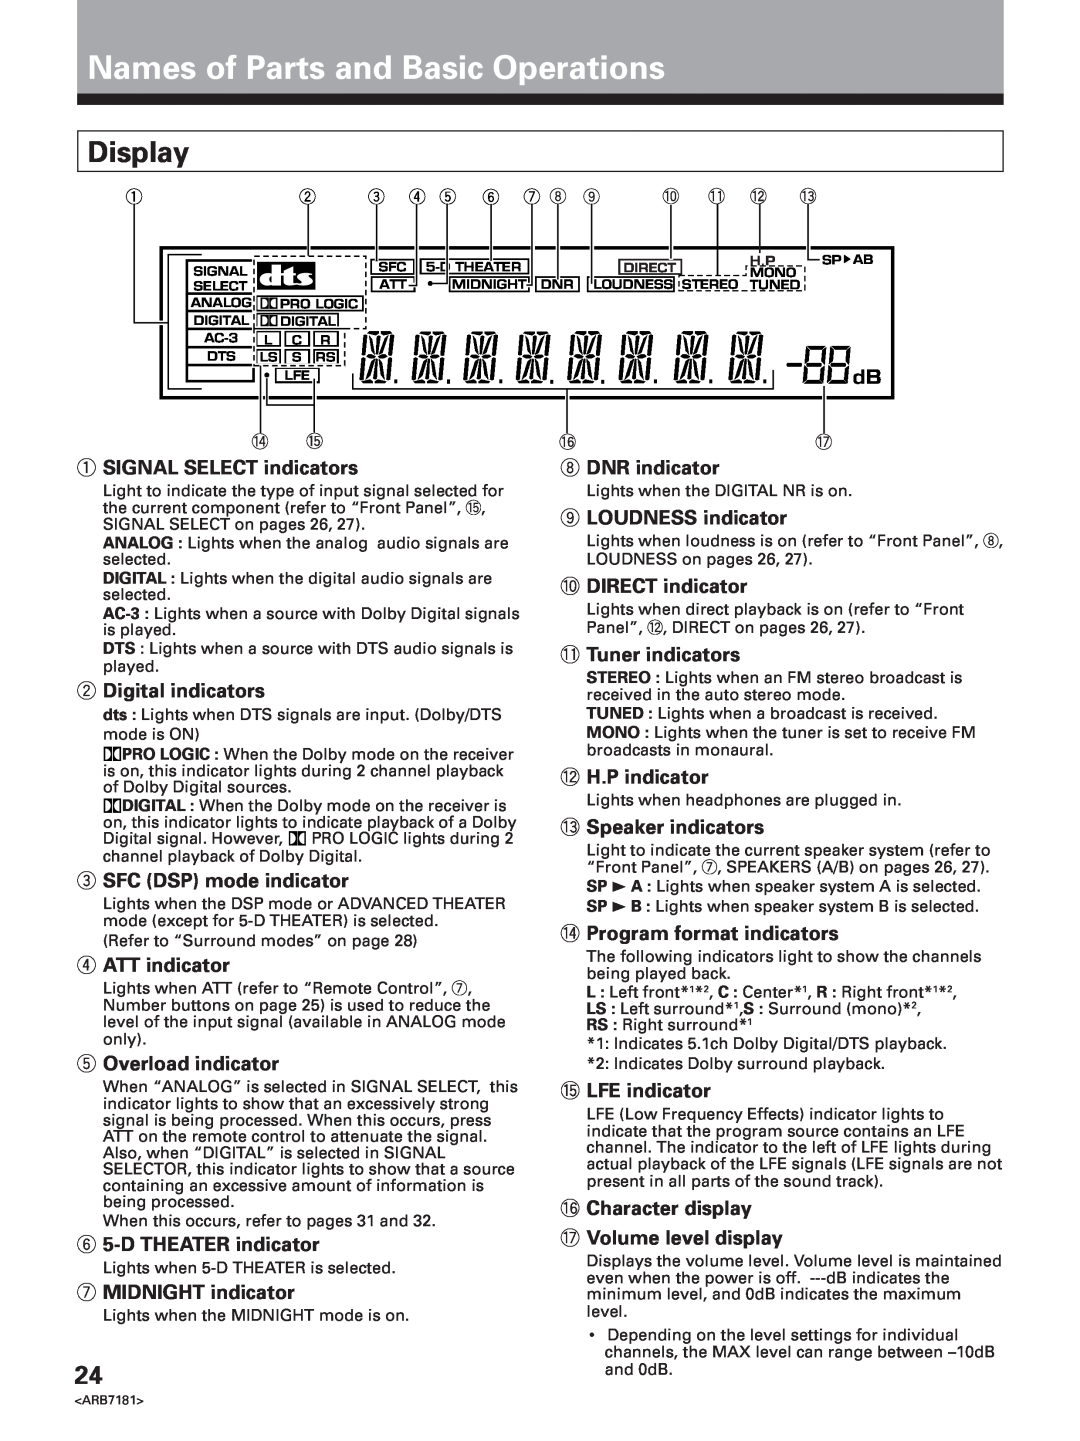 Pioneer VSX-21 manual Names of Parts and Basic Operations, Display 